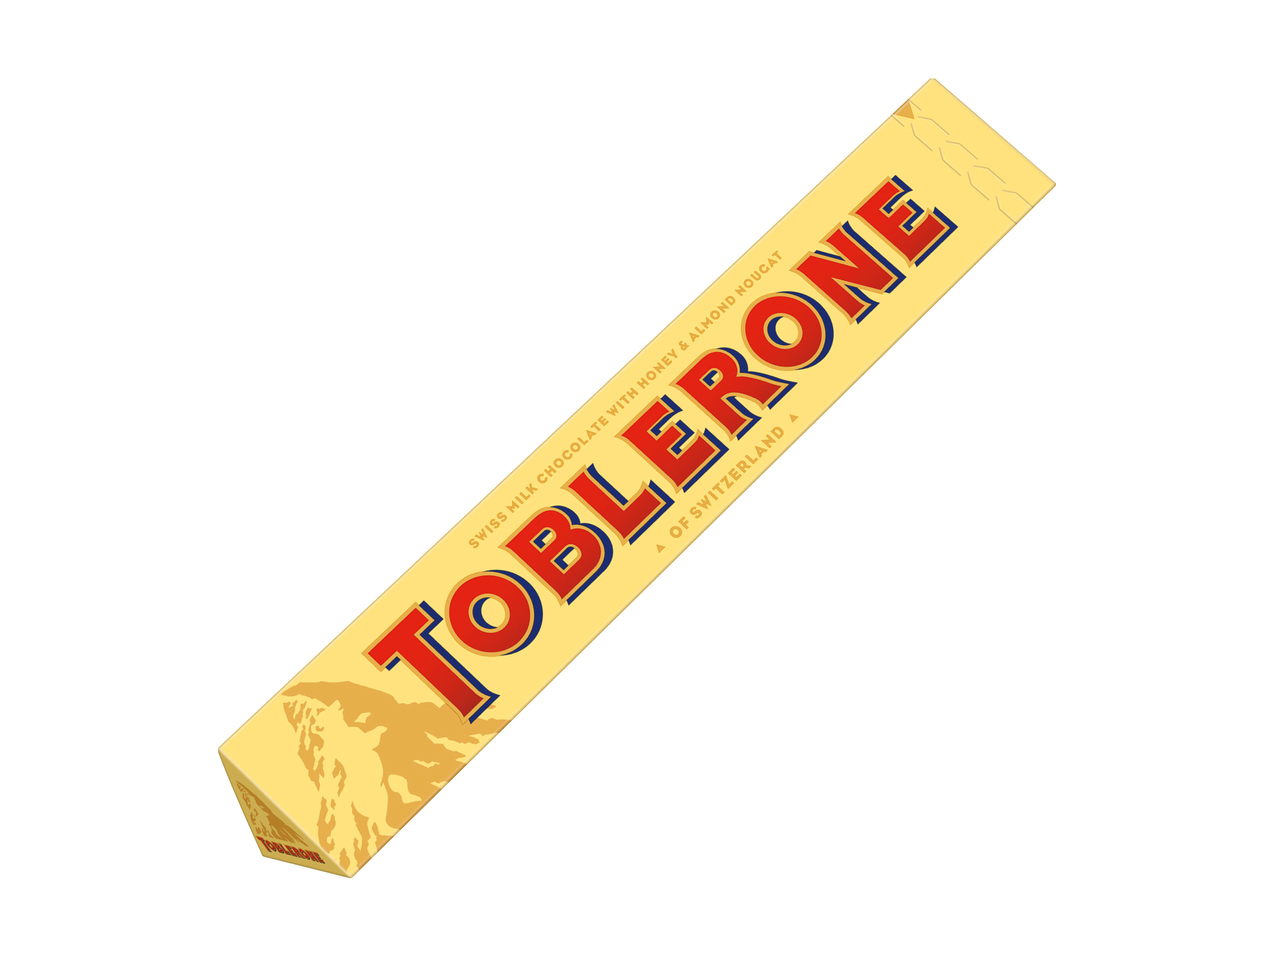 Toblerone Schokolade